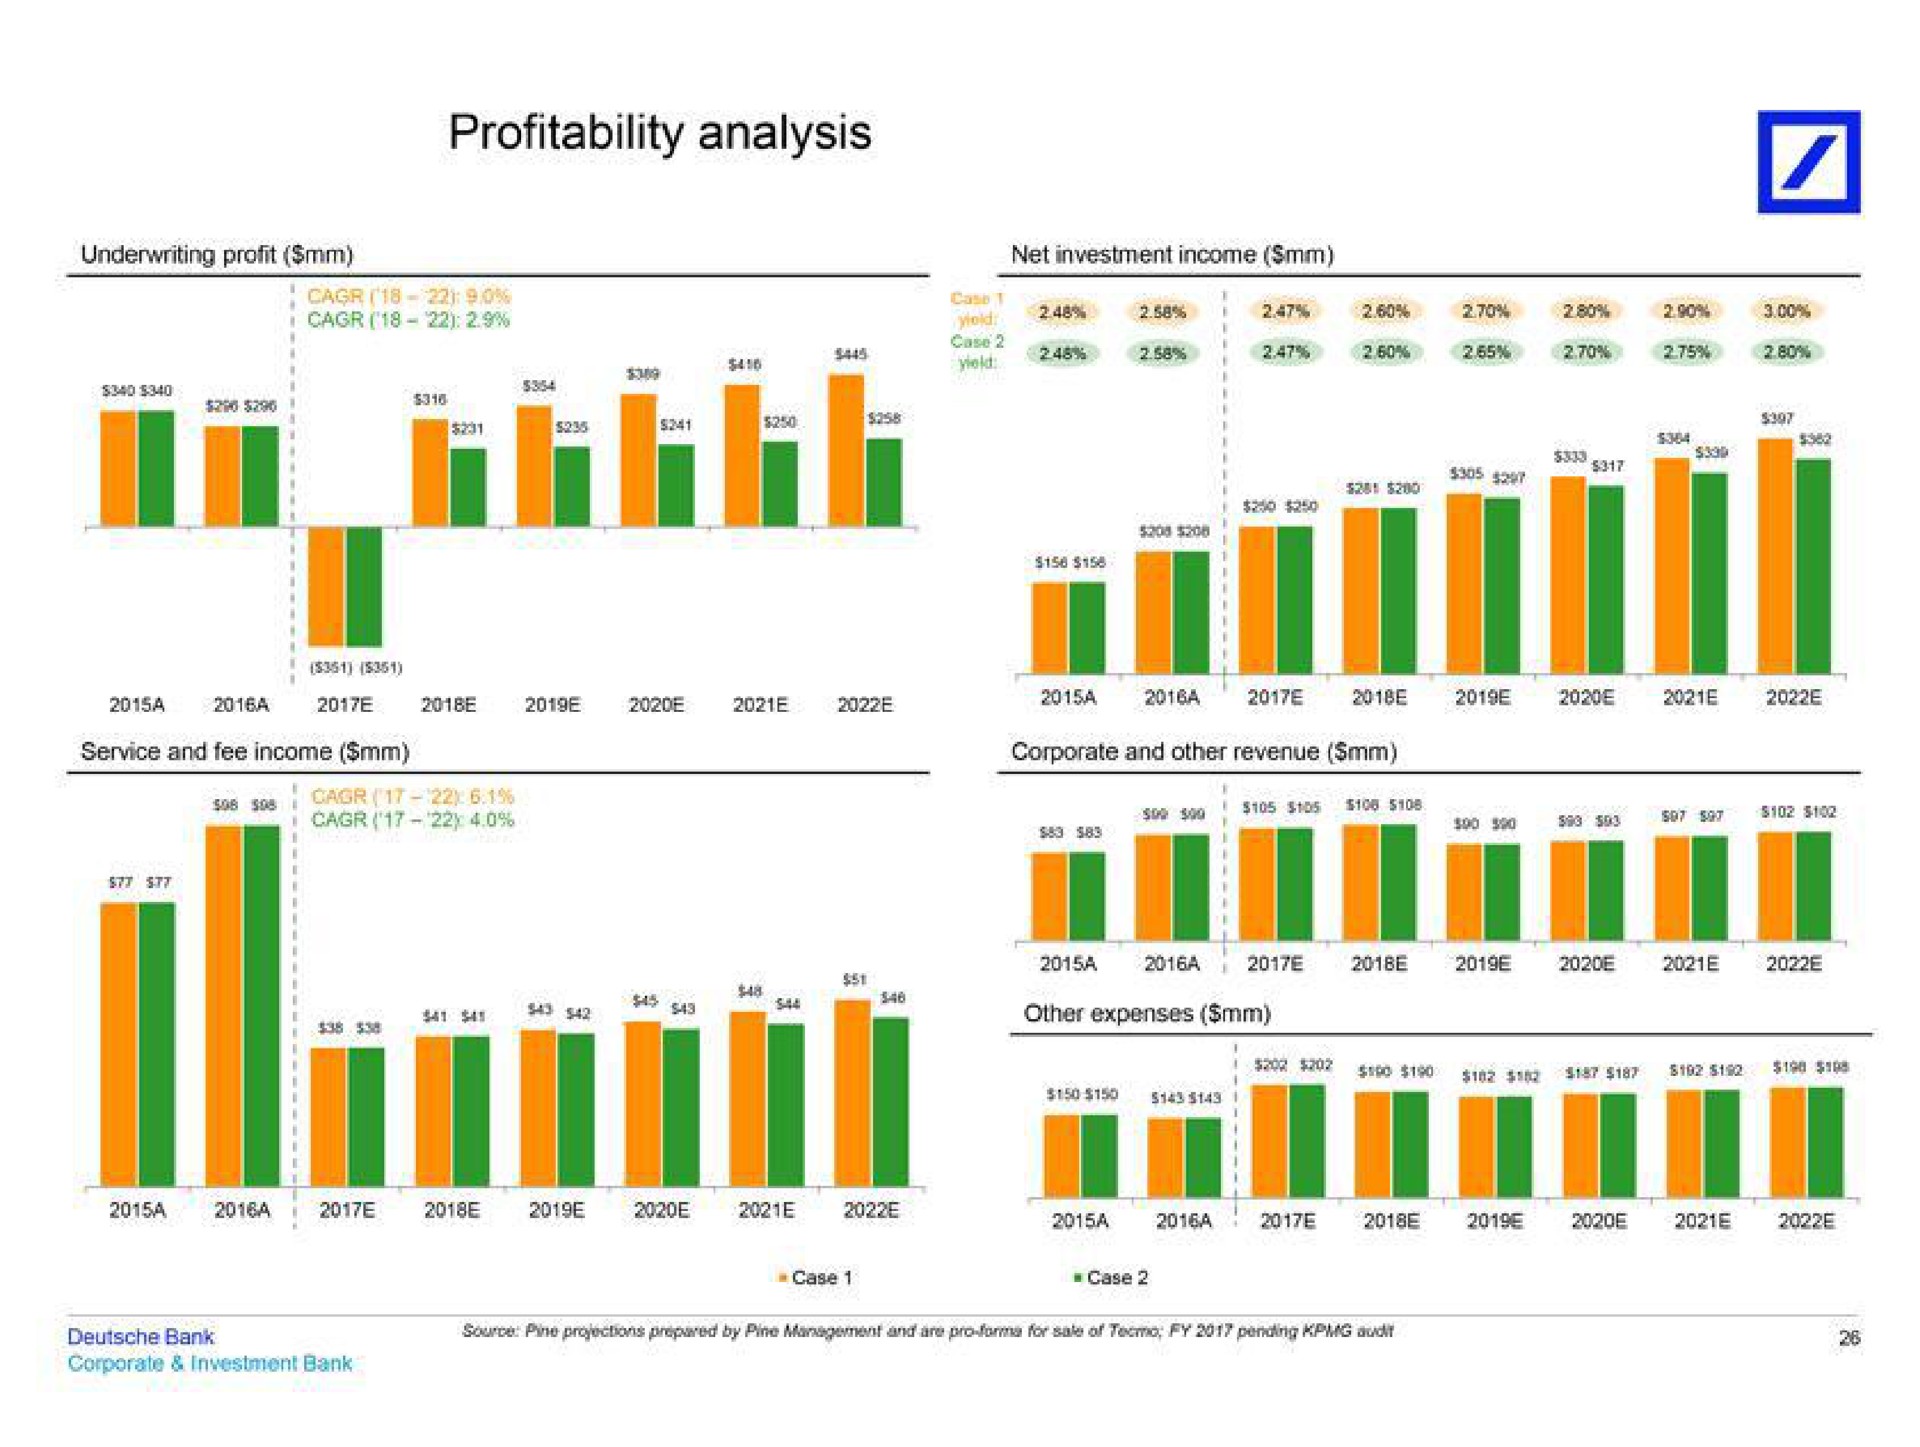 profitability analysis | Deutsche Bank